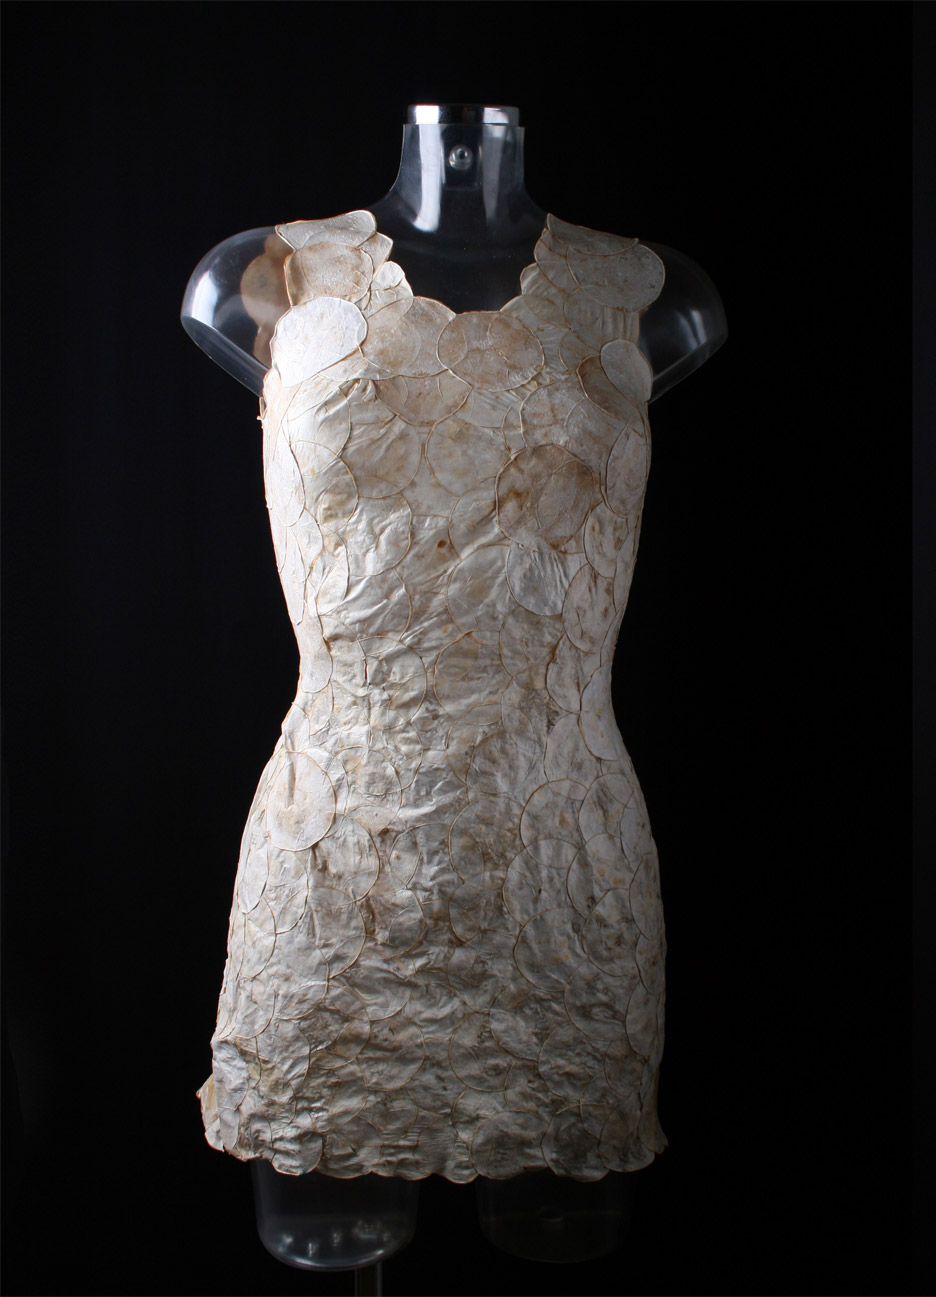 Mycellium dress by Neffa